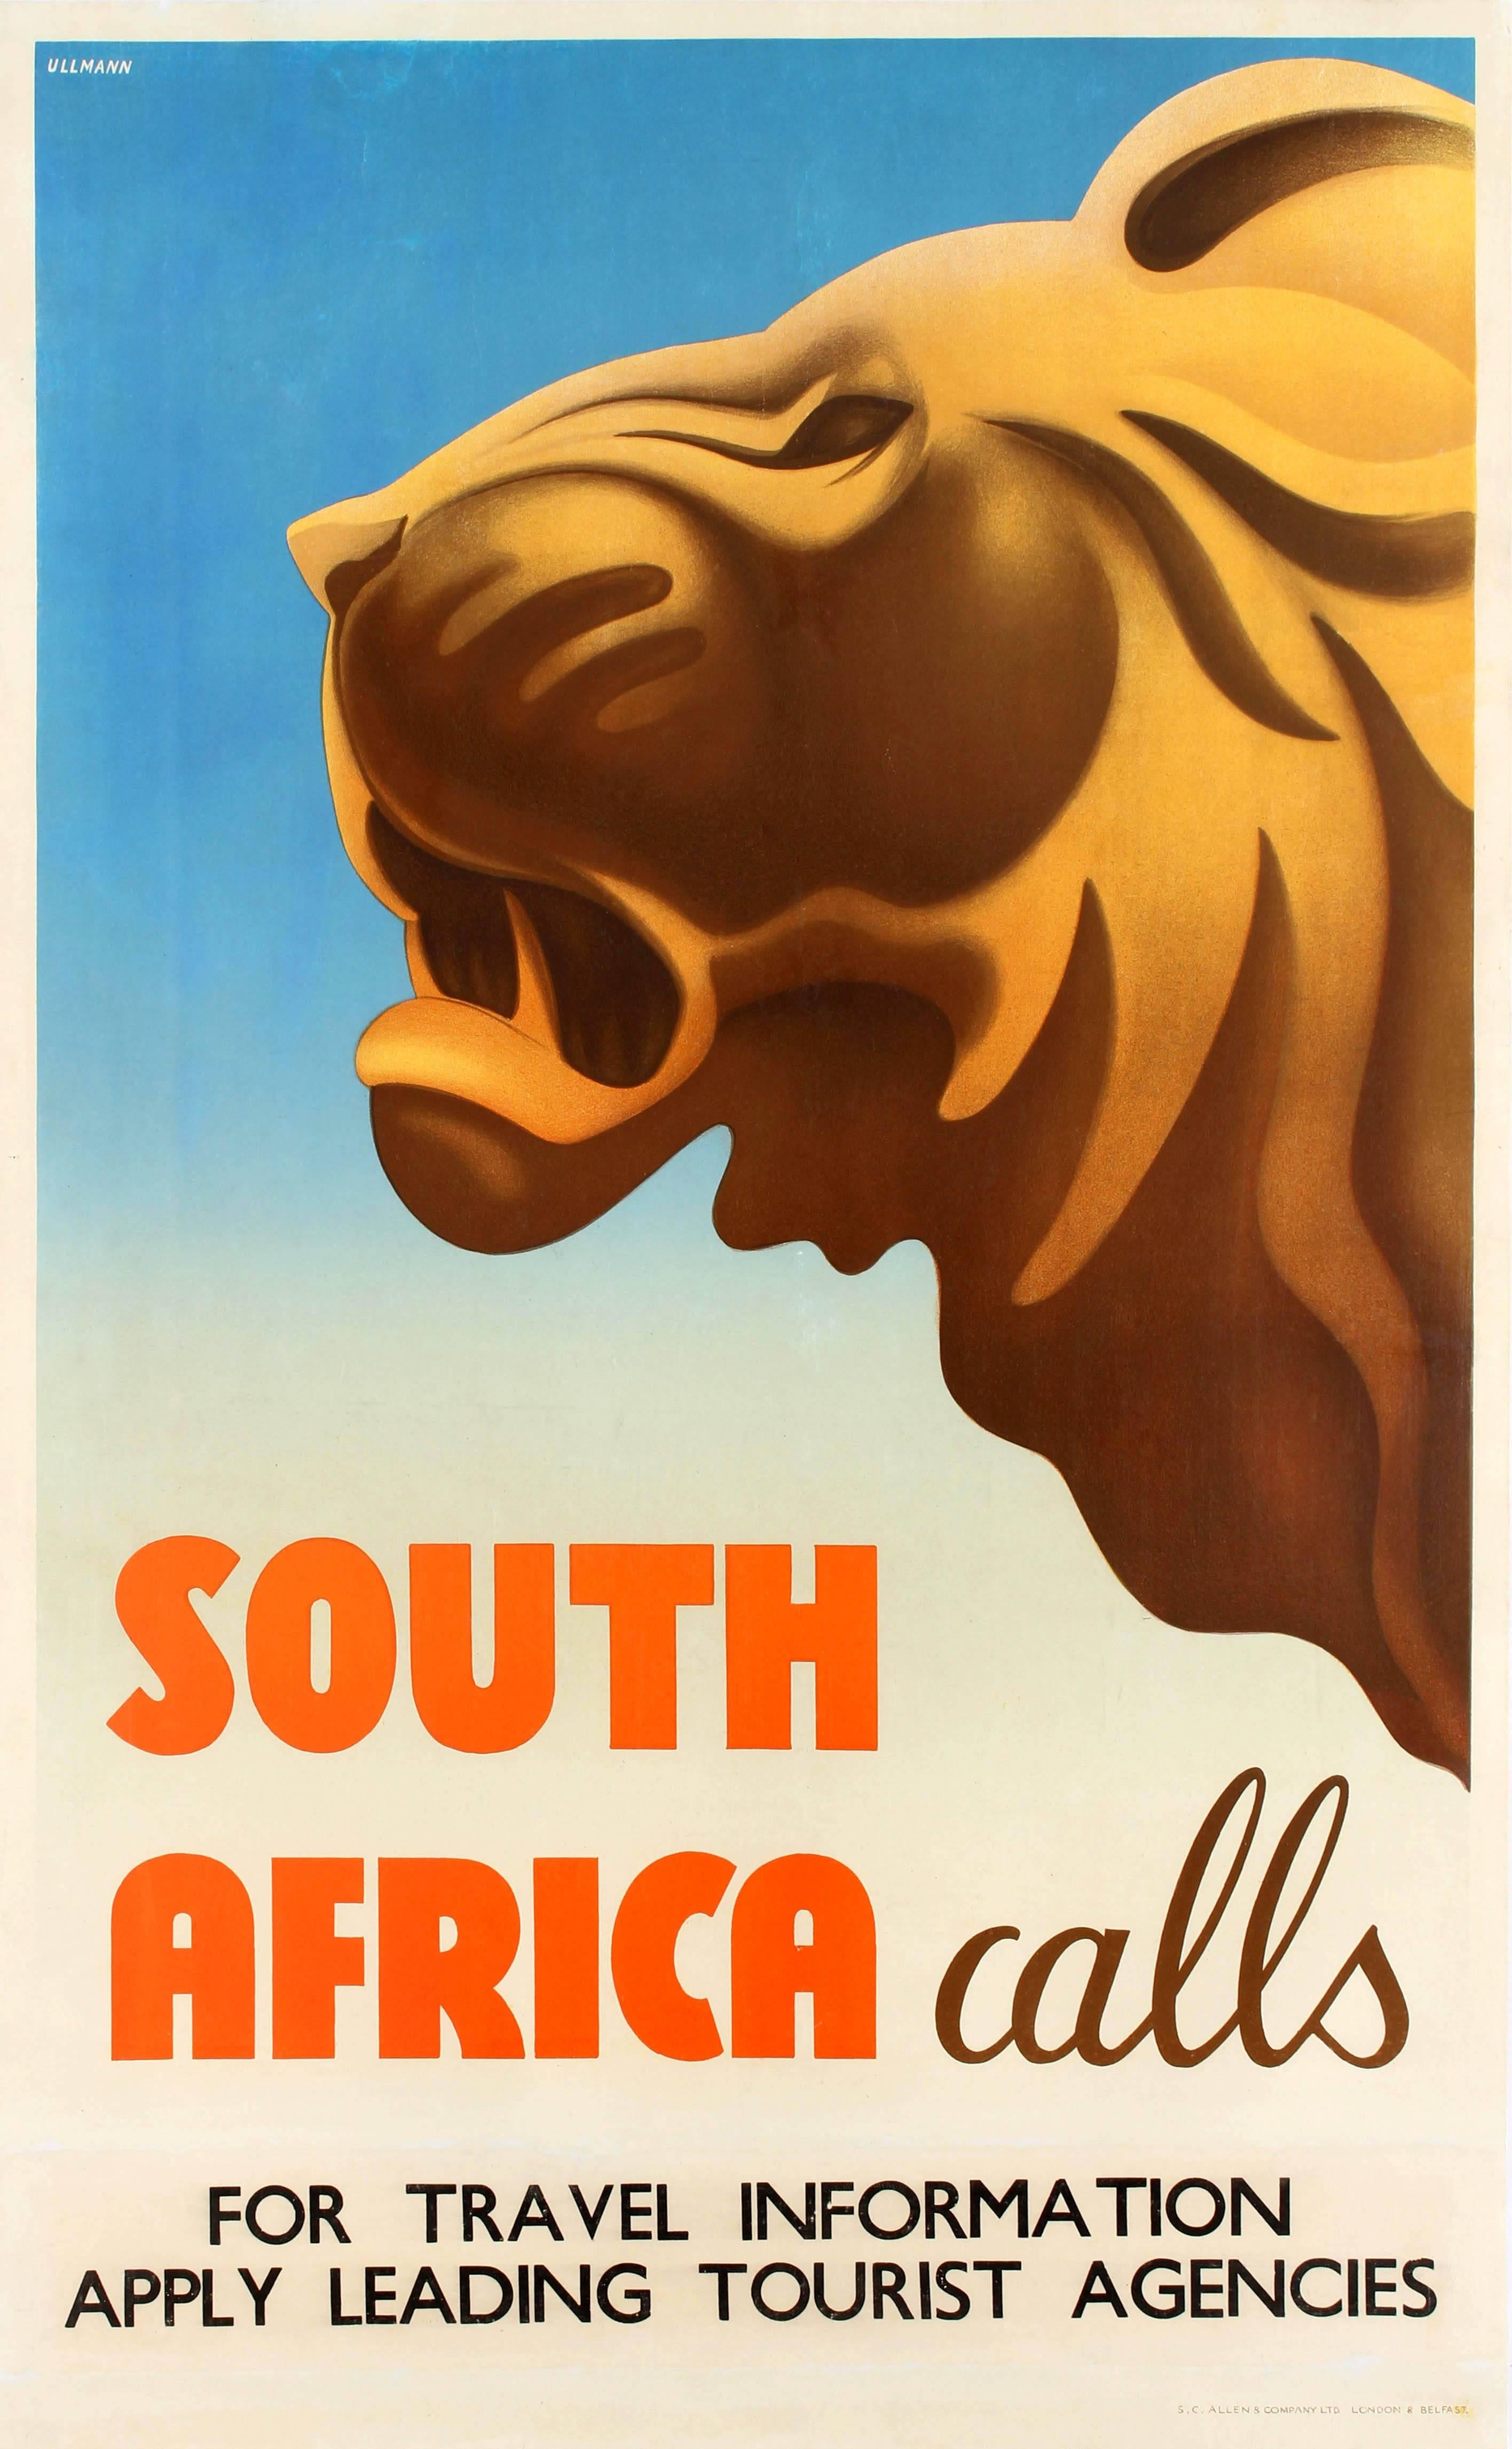 Gayle Ullmann Print - Original Vintage Art Deco Style Travel Poster Feat. A Lion - South Africa Calls